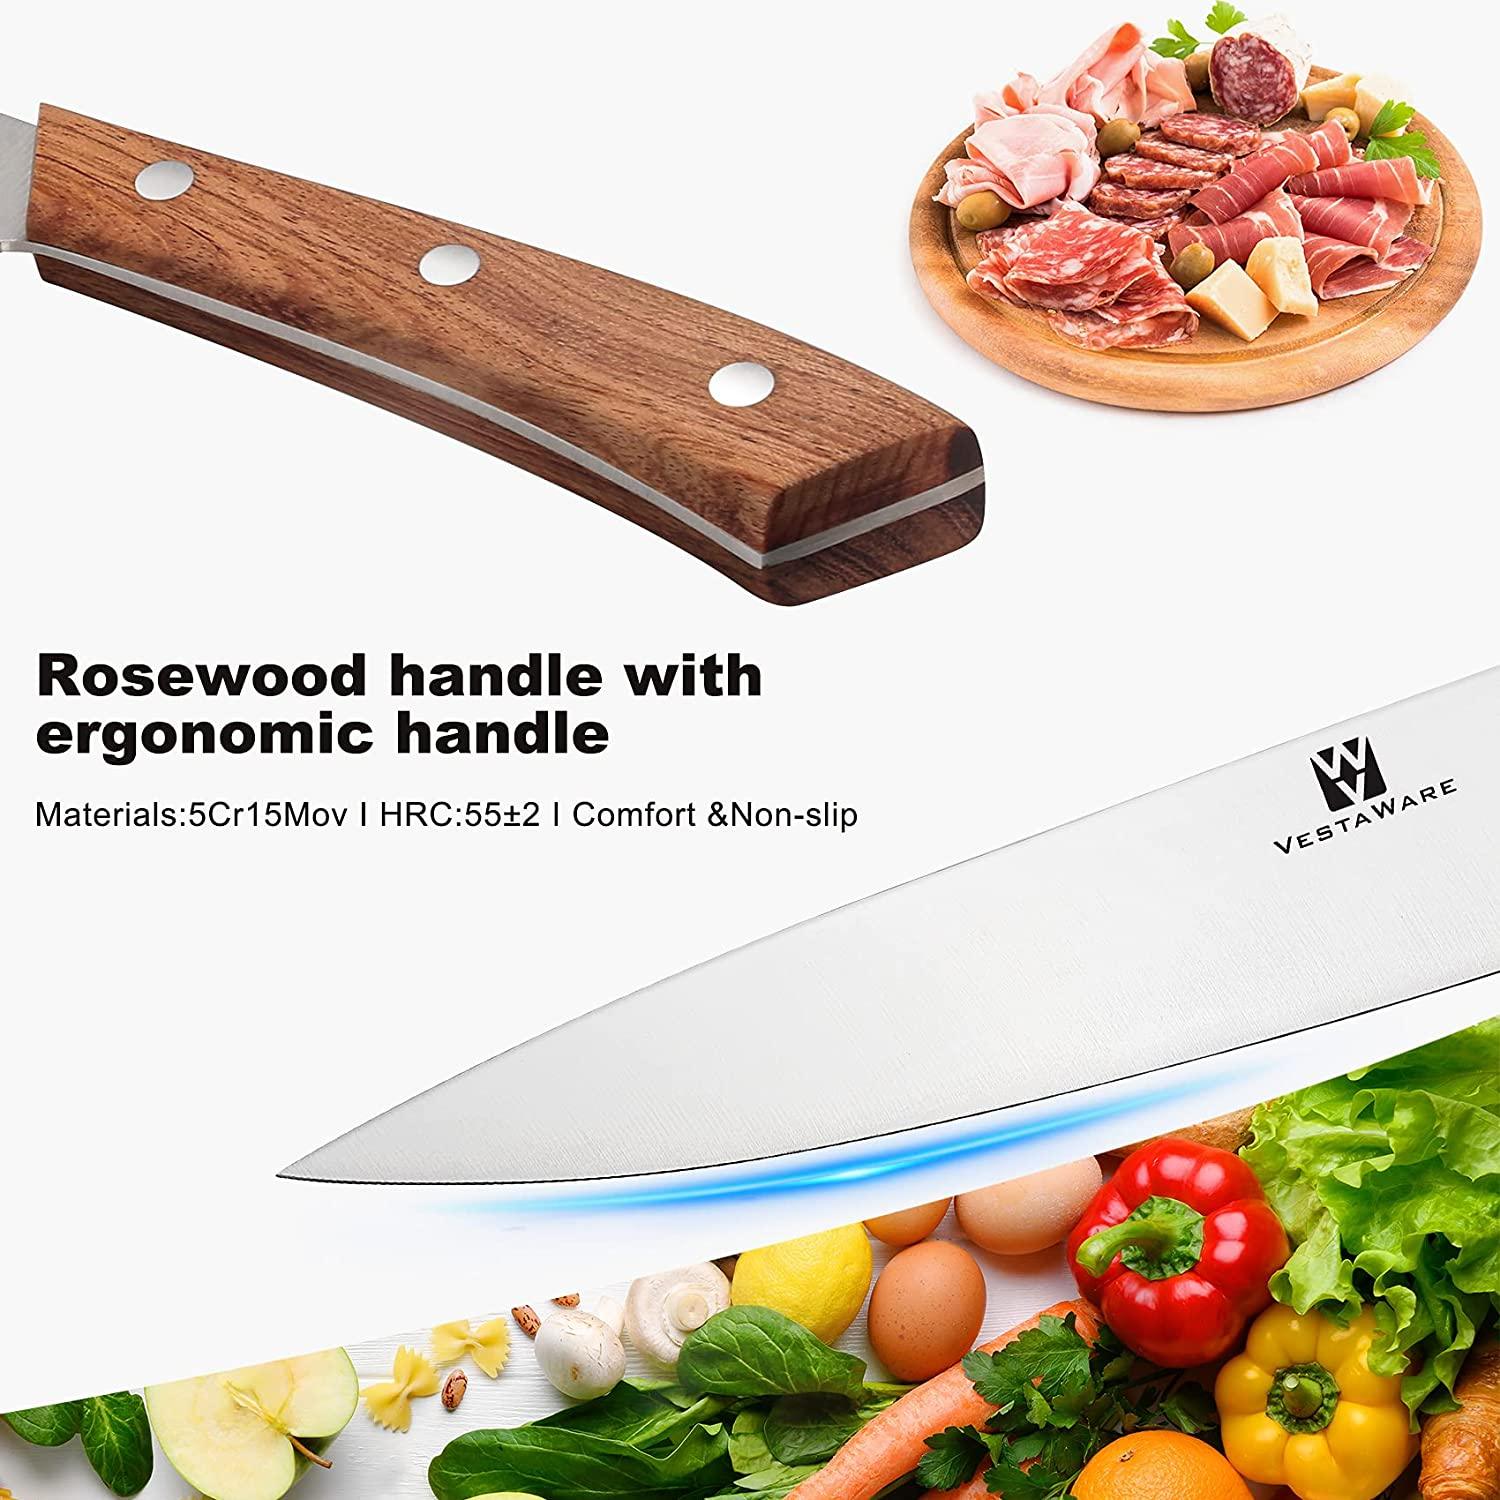 Vestaware 6-Piece Chef Knife Set with Wooden Block - IMARKU